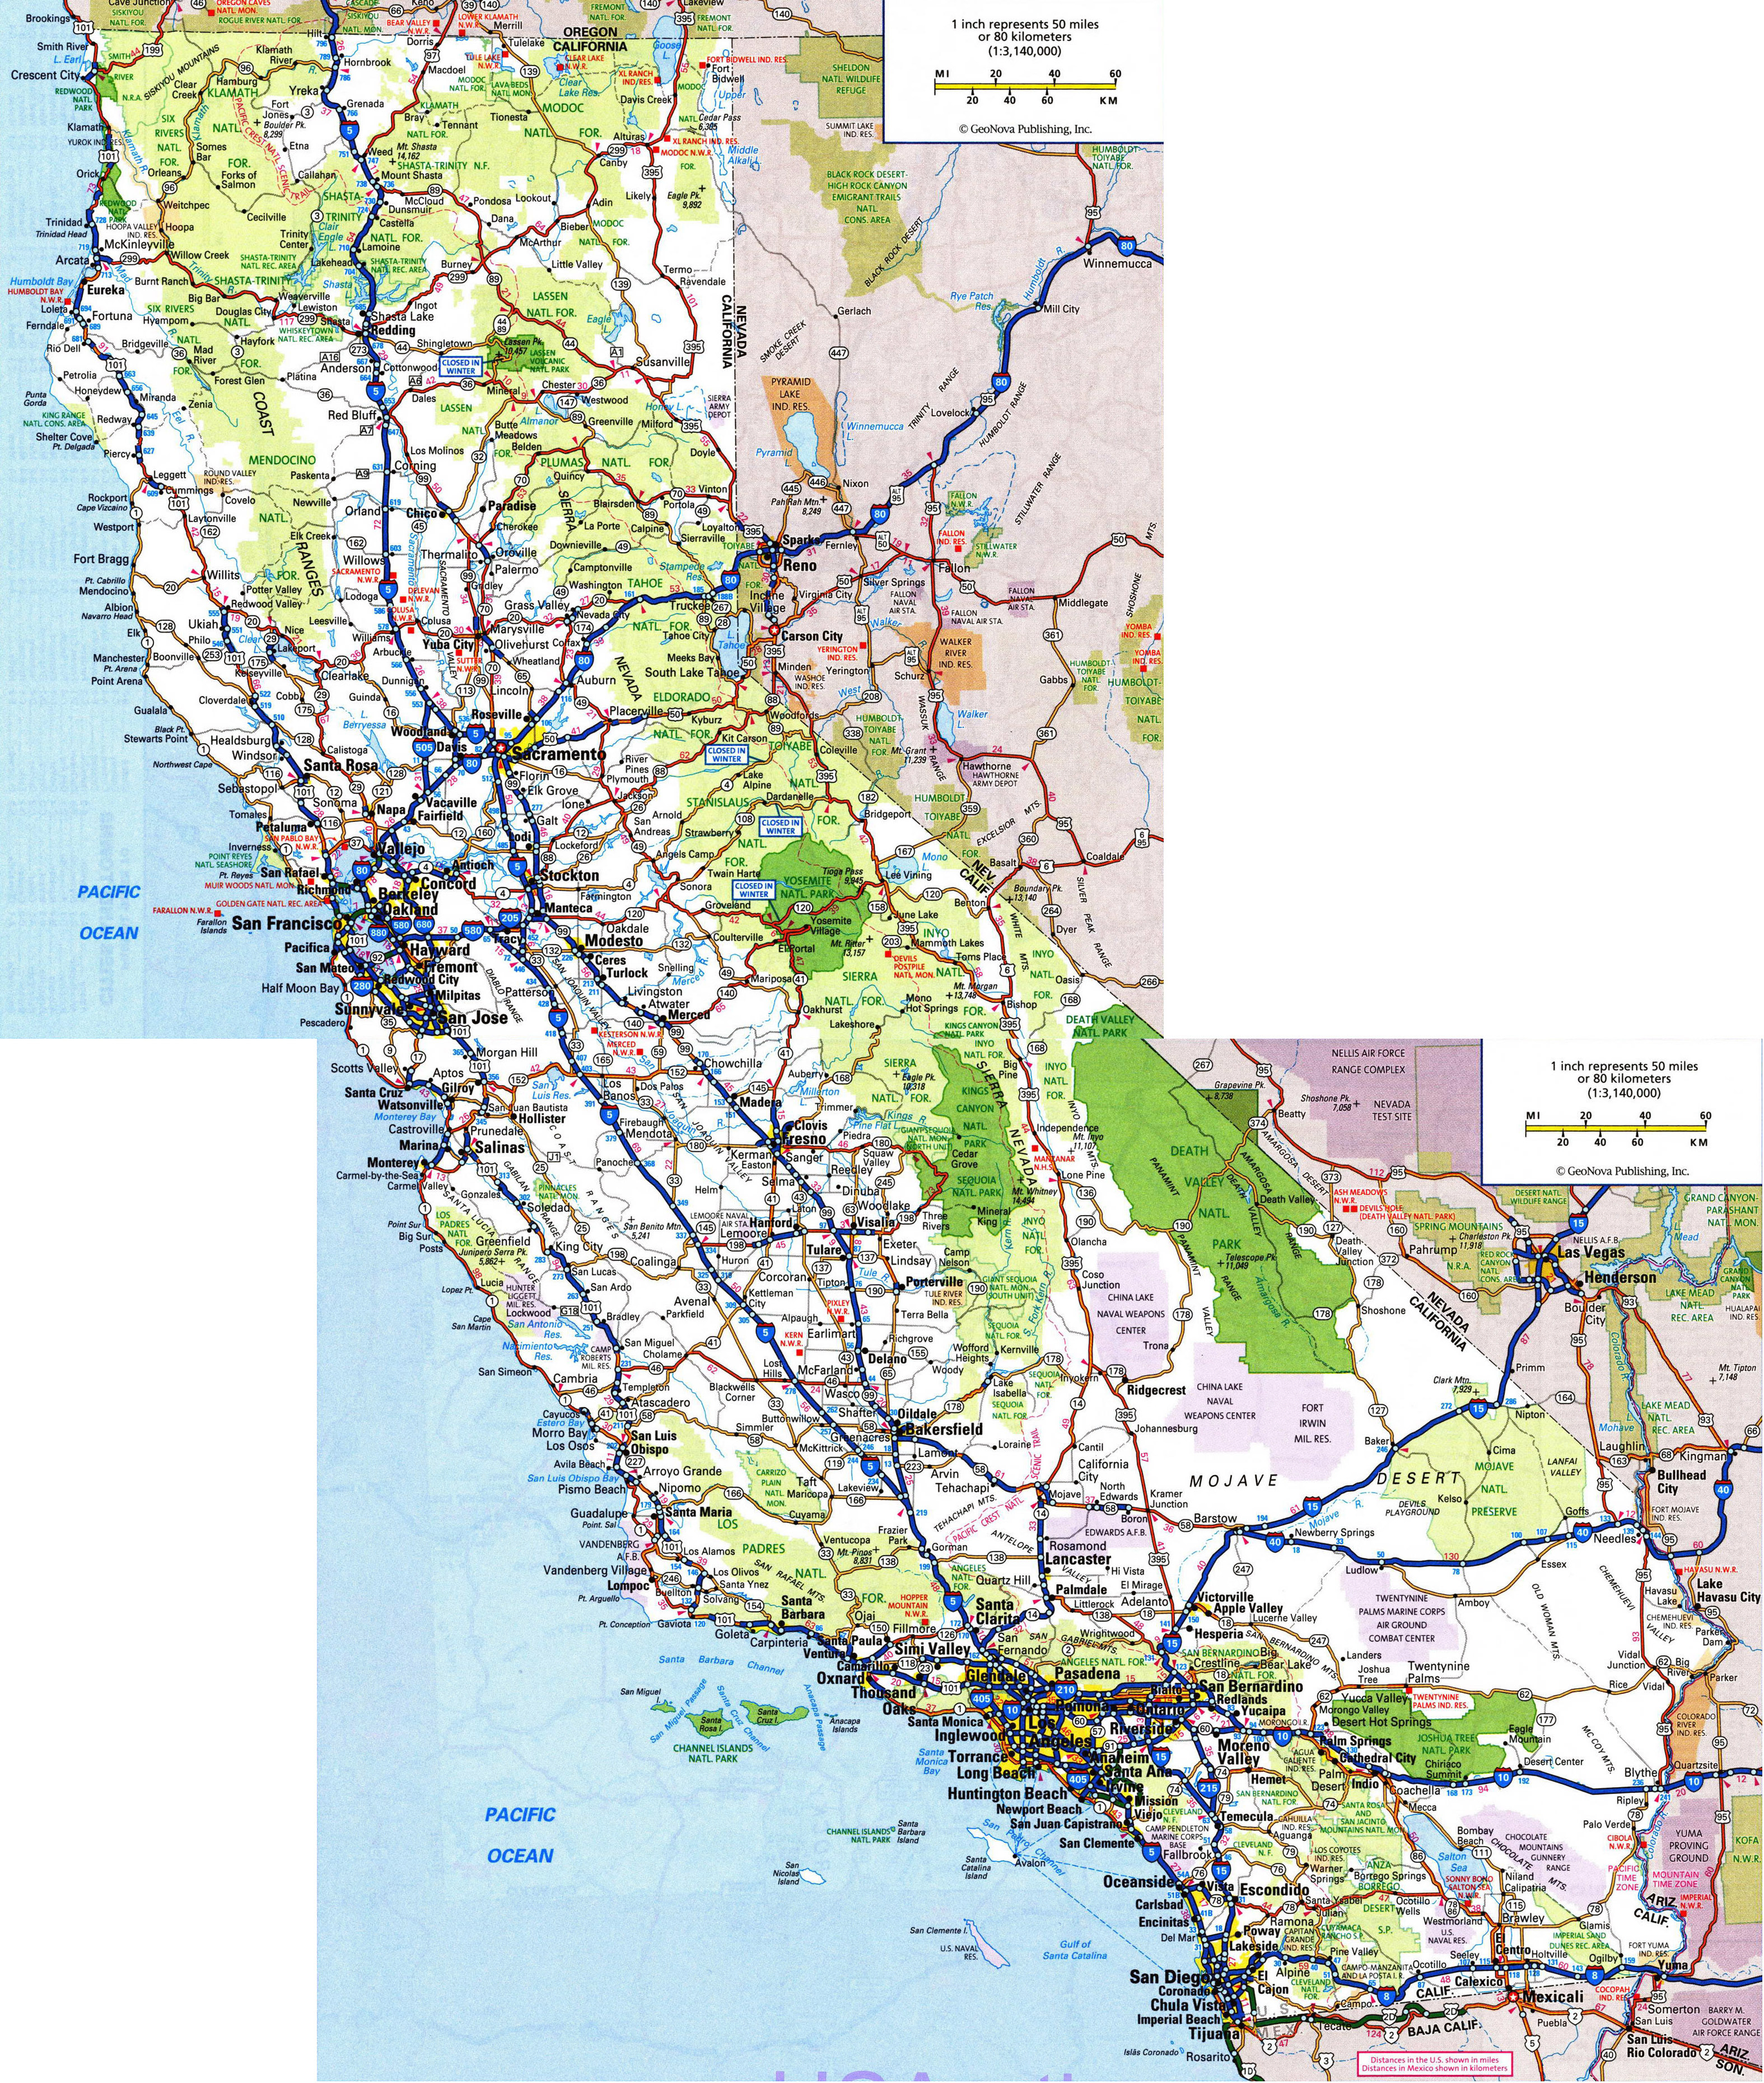 Northern California City Map - Klipy - Northern California National Parks Map